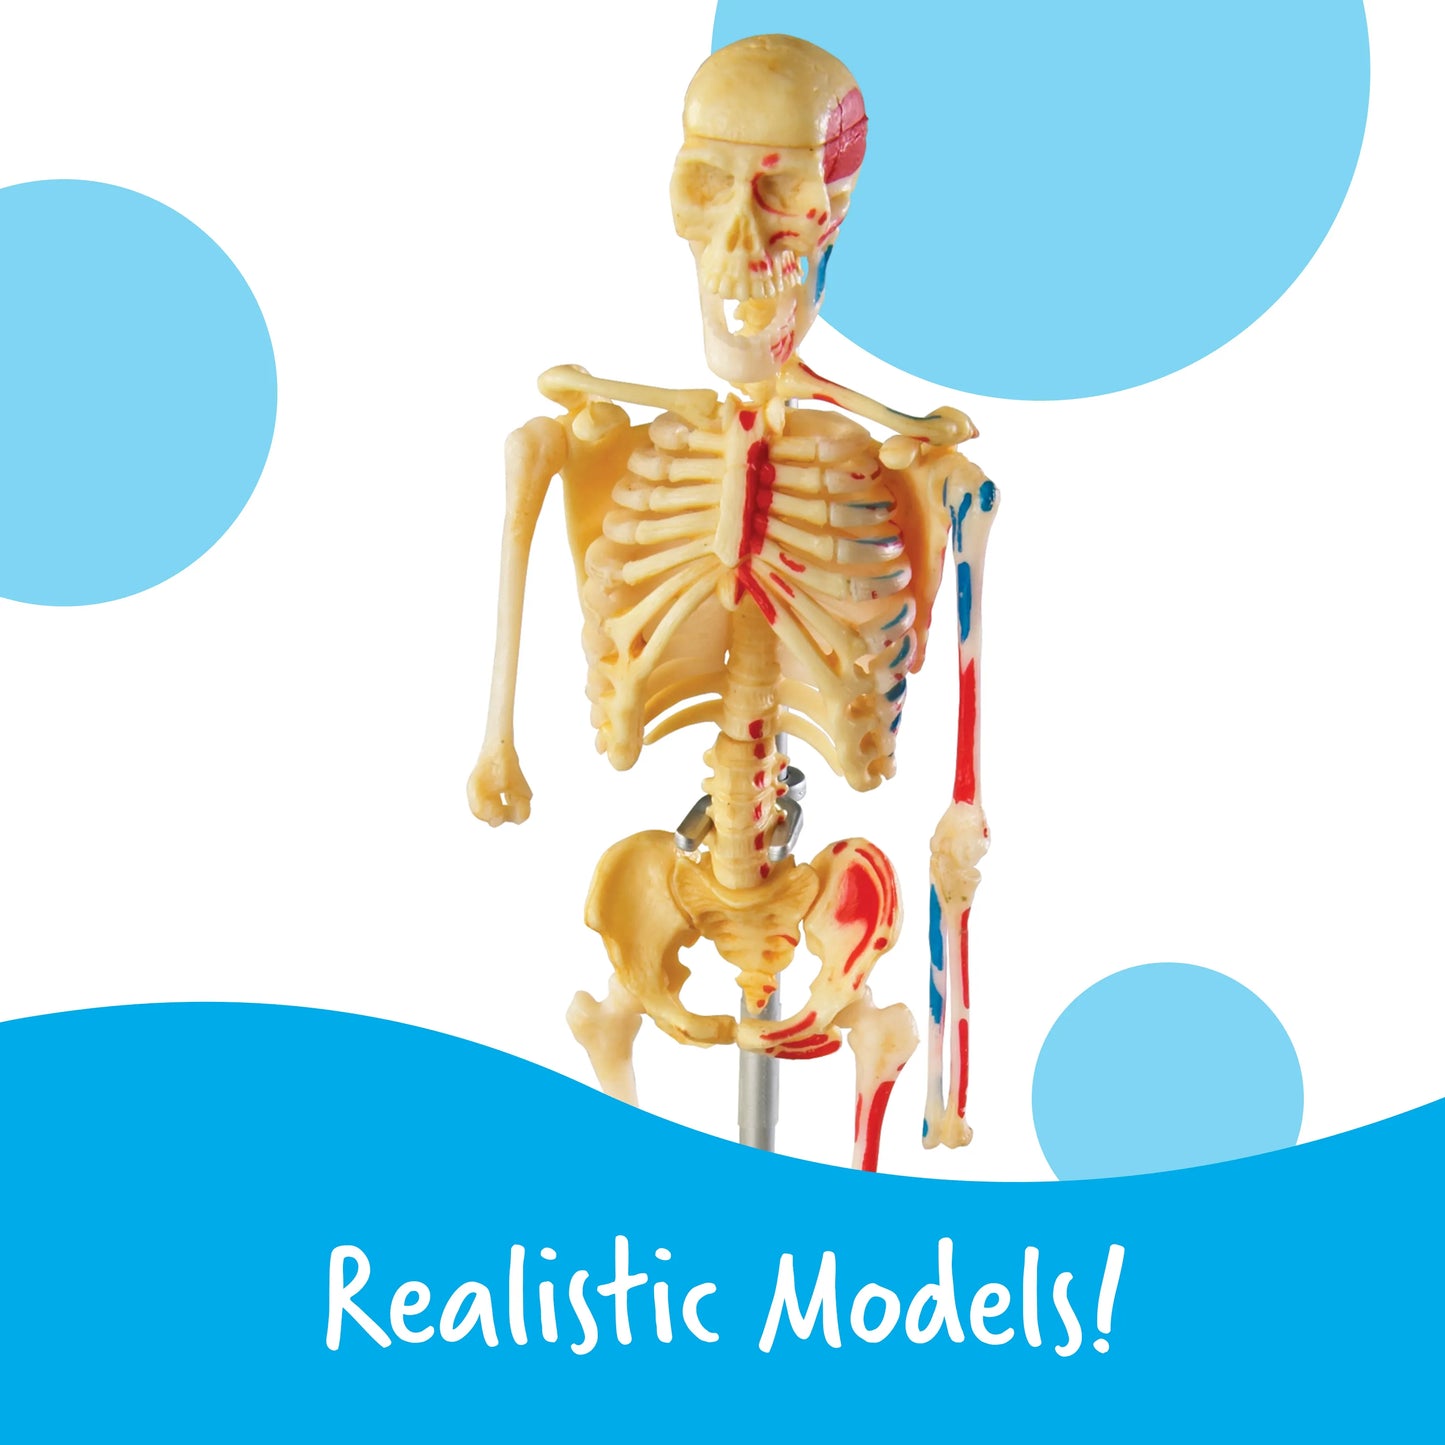 Learning Resources Anatomy Models Bundle